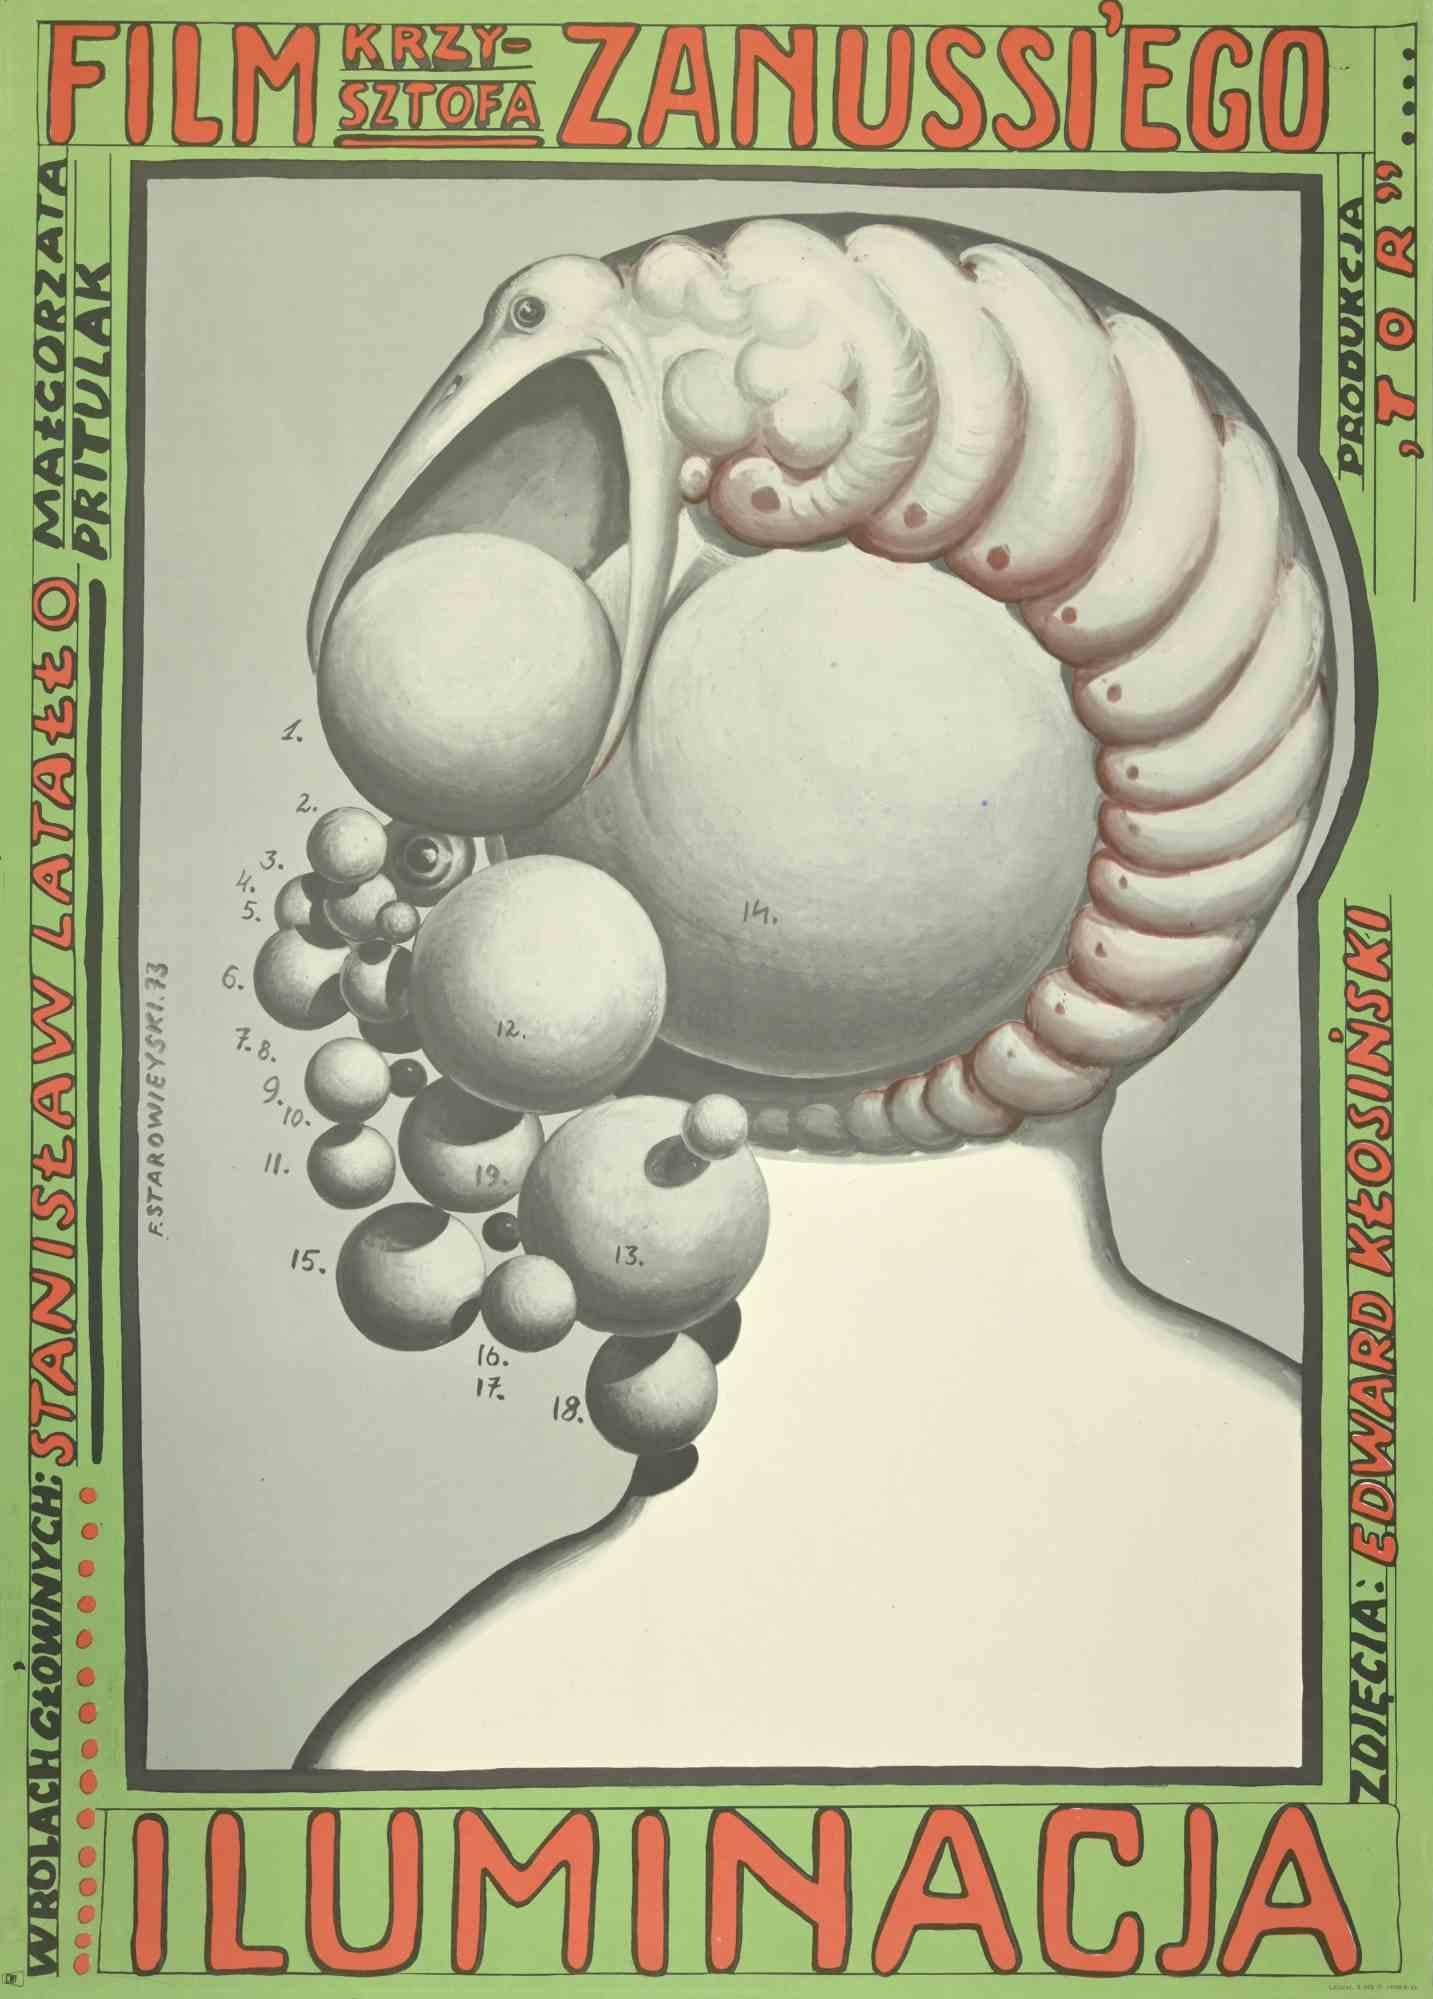 Affiche vintage Iluminacia - Zanussi Ego - offset original - 1973